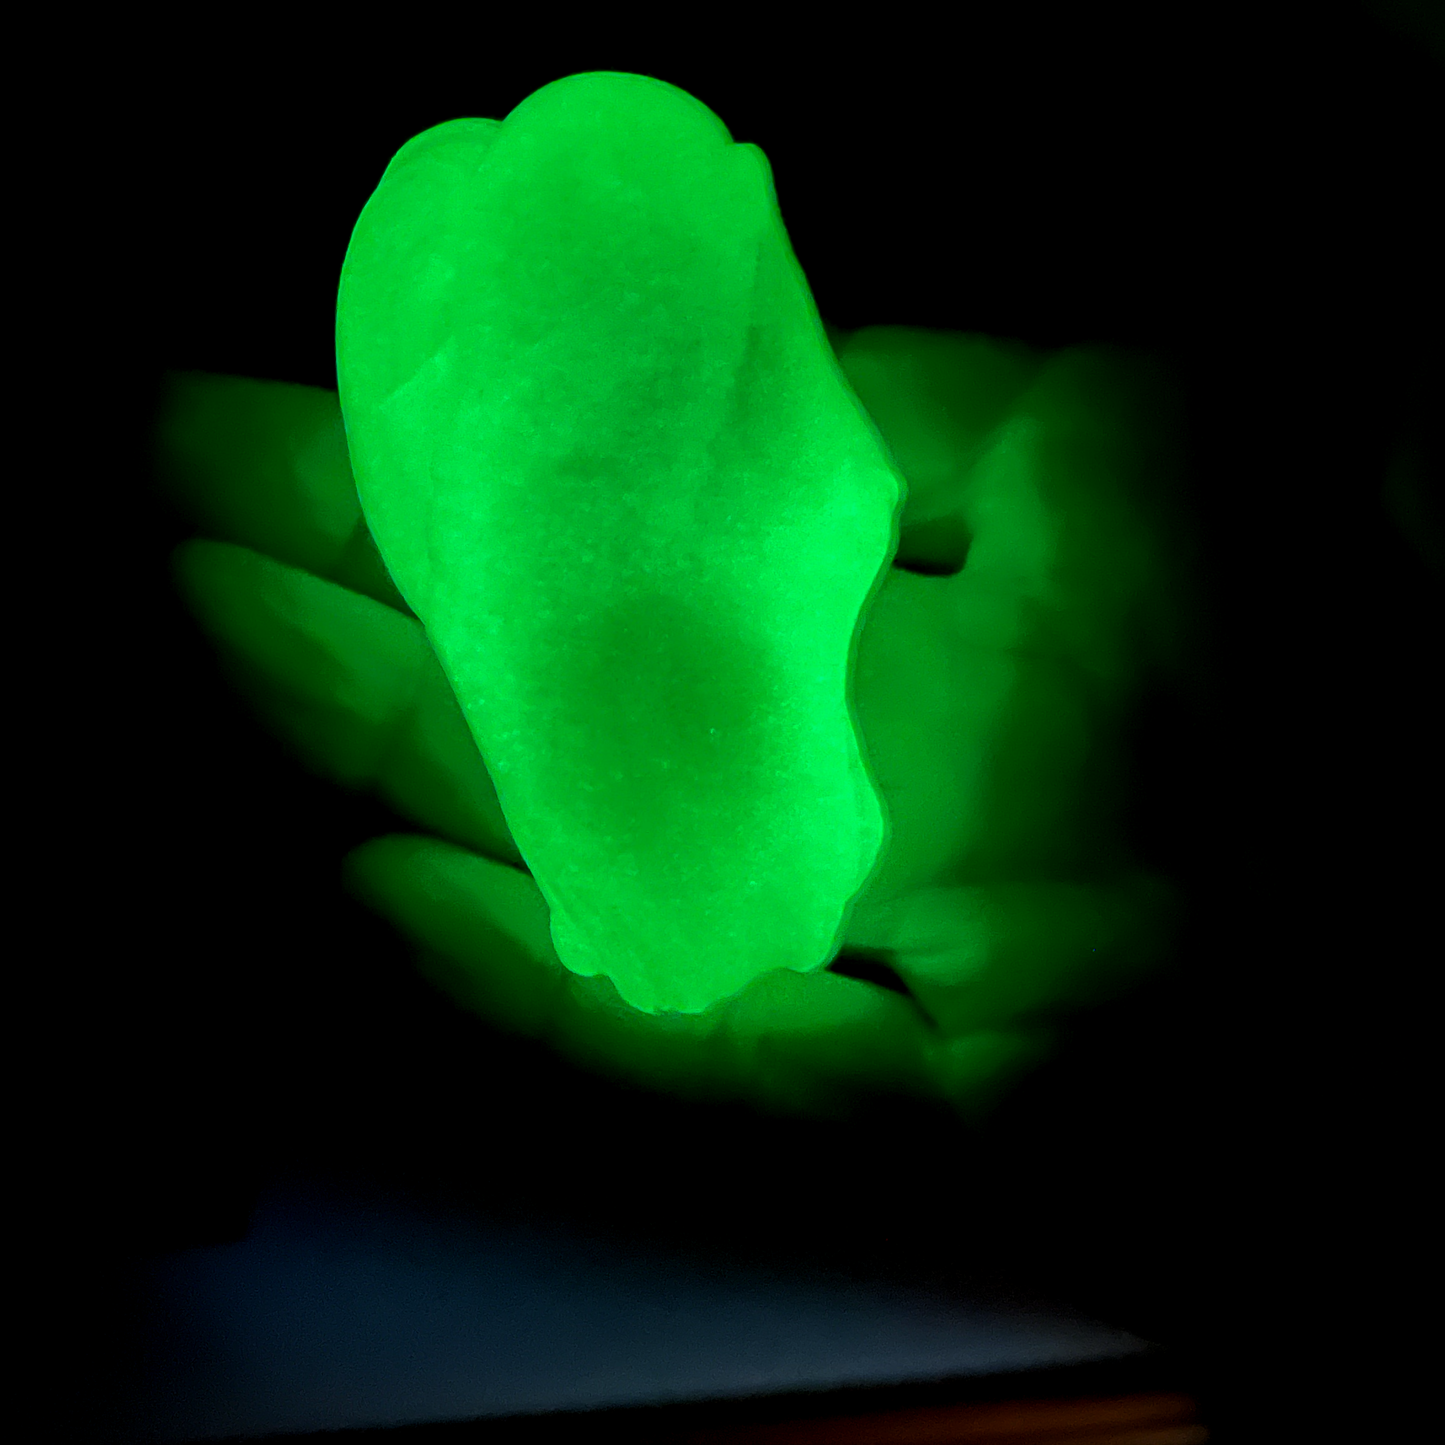 Gootonium: Glowing Green Putty